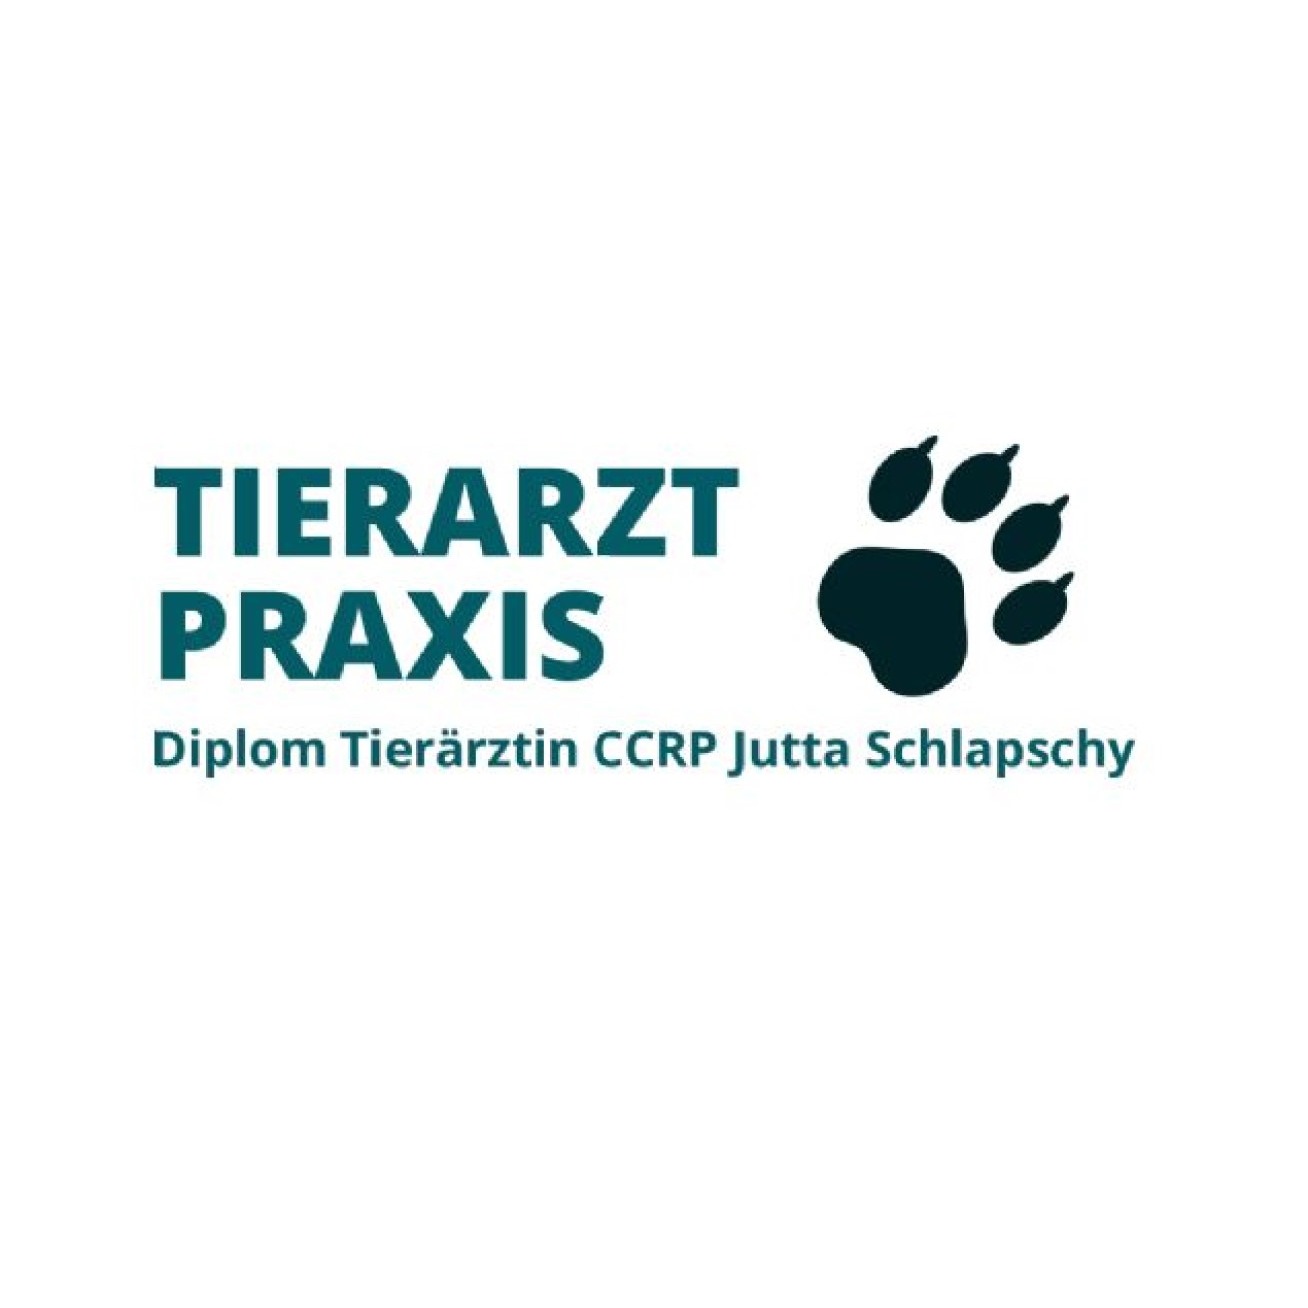 Tierarzt Praxis Diplom Tierärztin CCRP Jutta Schlapschy Logo